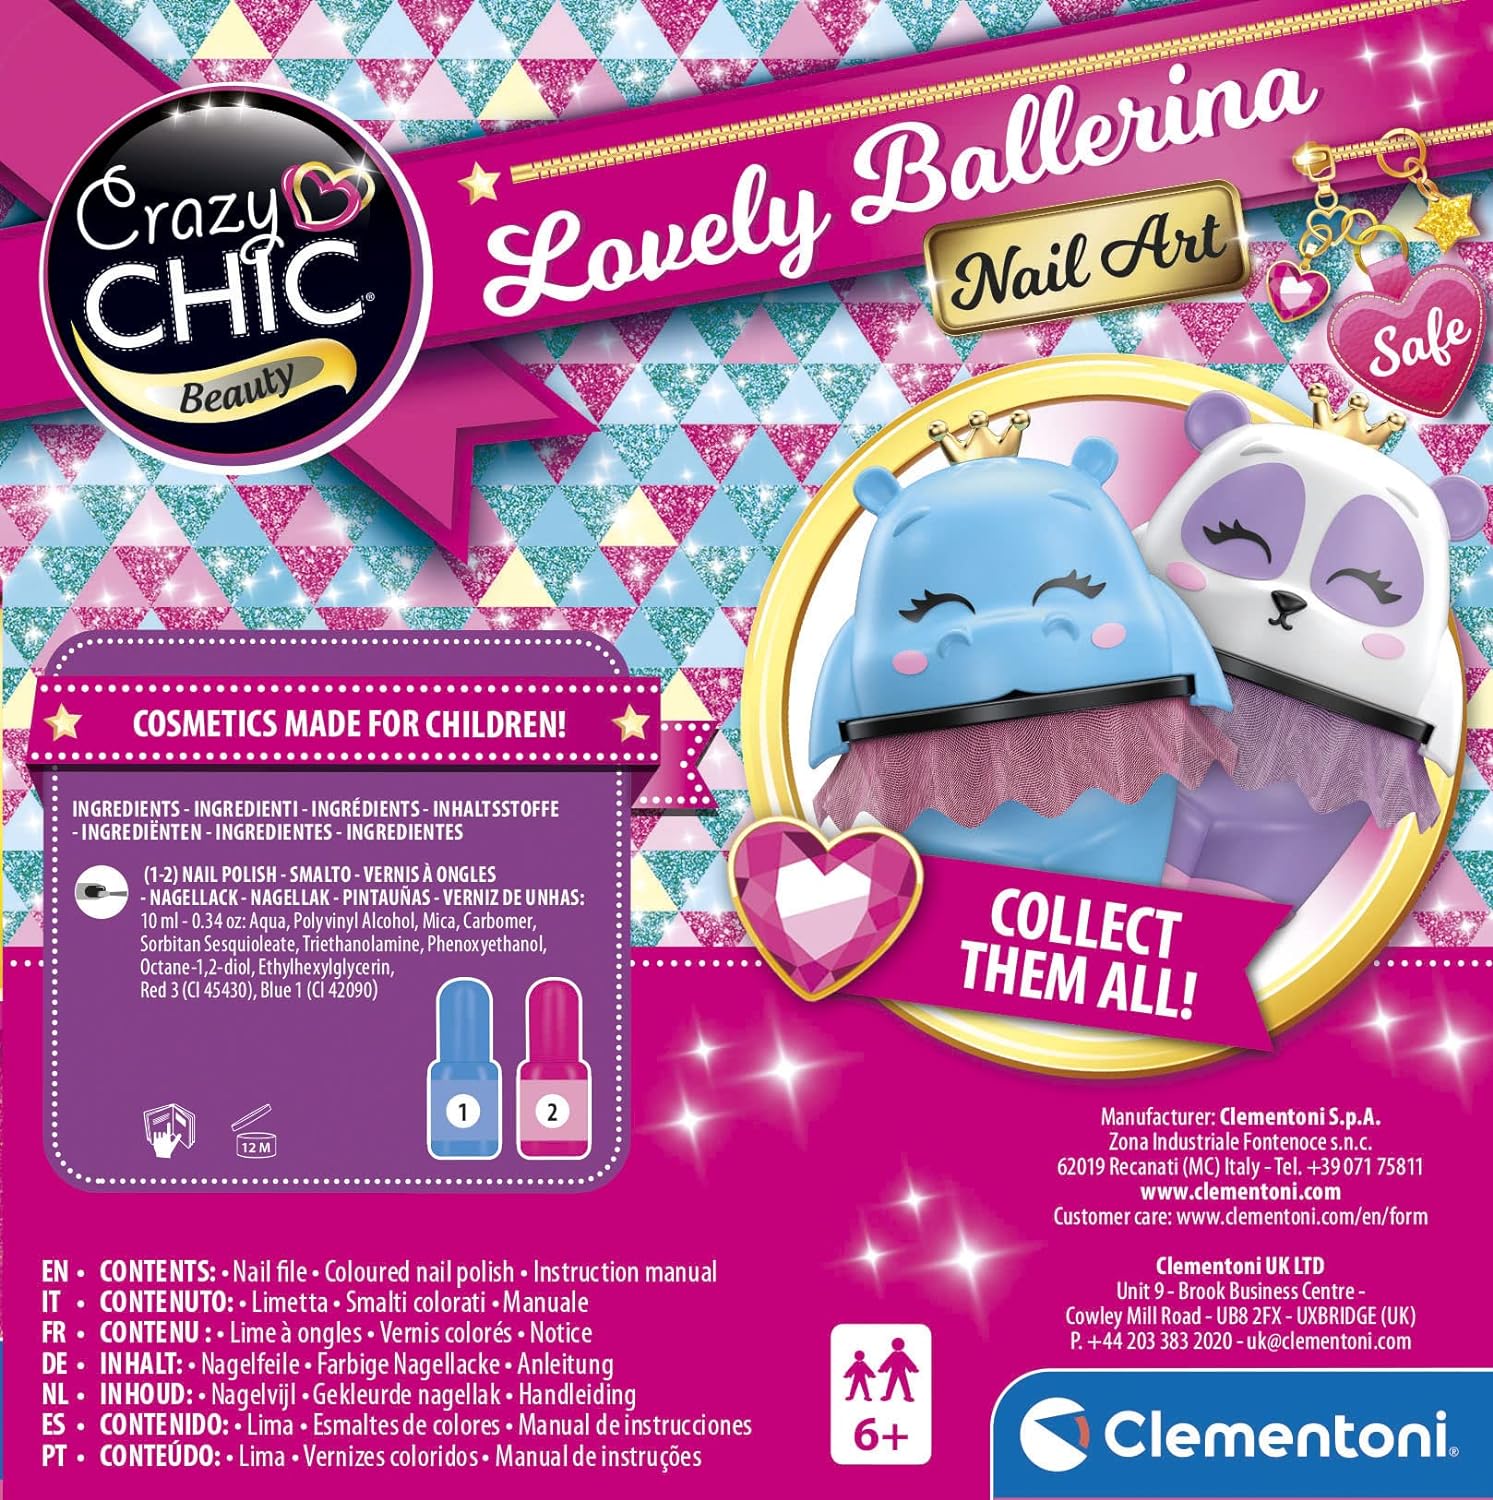 Clementoni Crazy Chic - Ballerina Collection - Panda